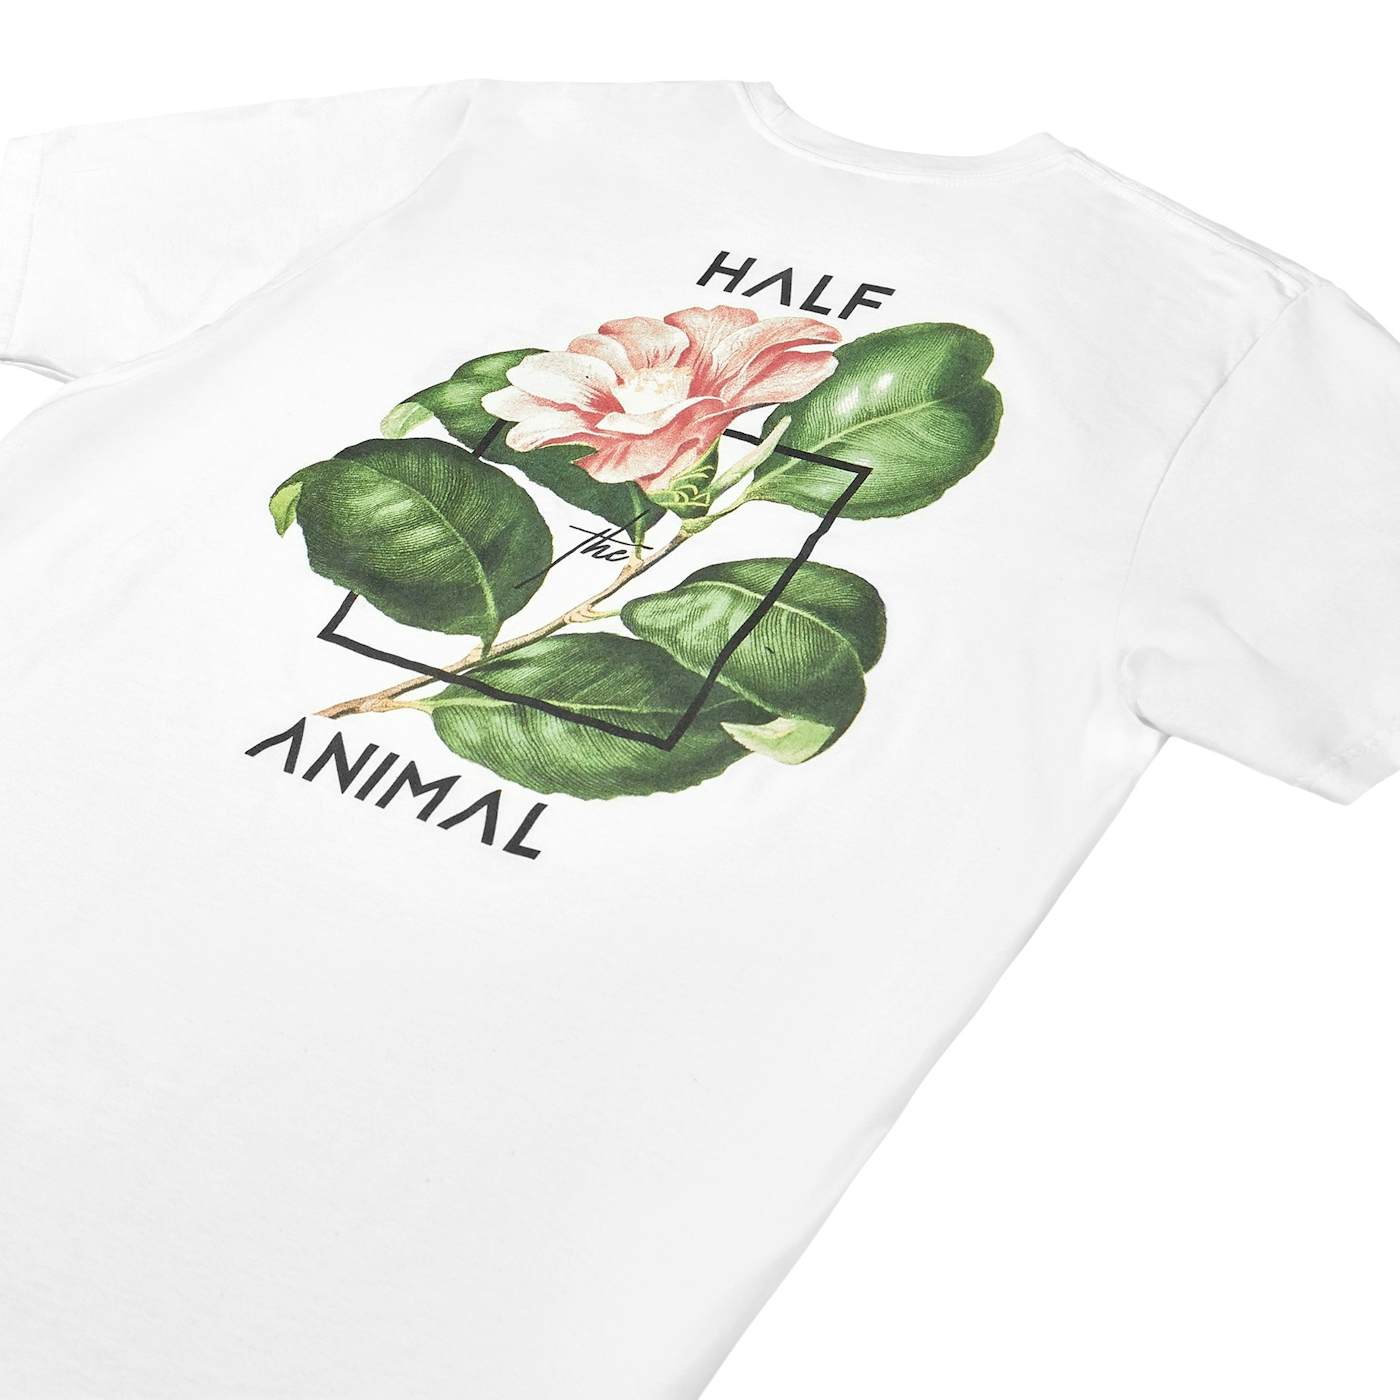 Half the Animal Flower Square T-shirt (White)